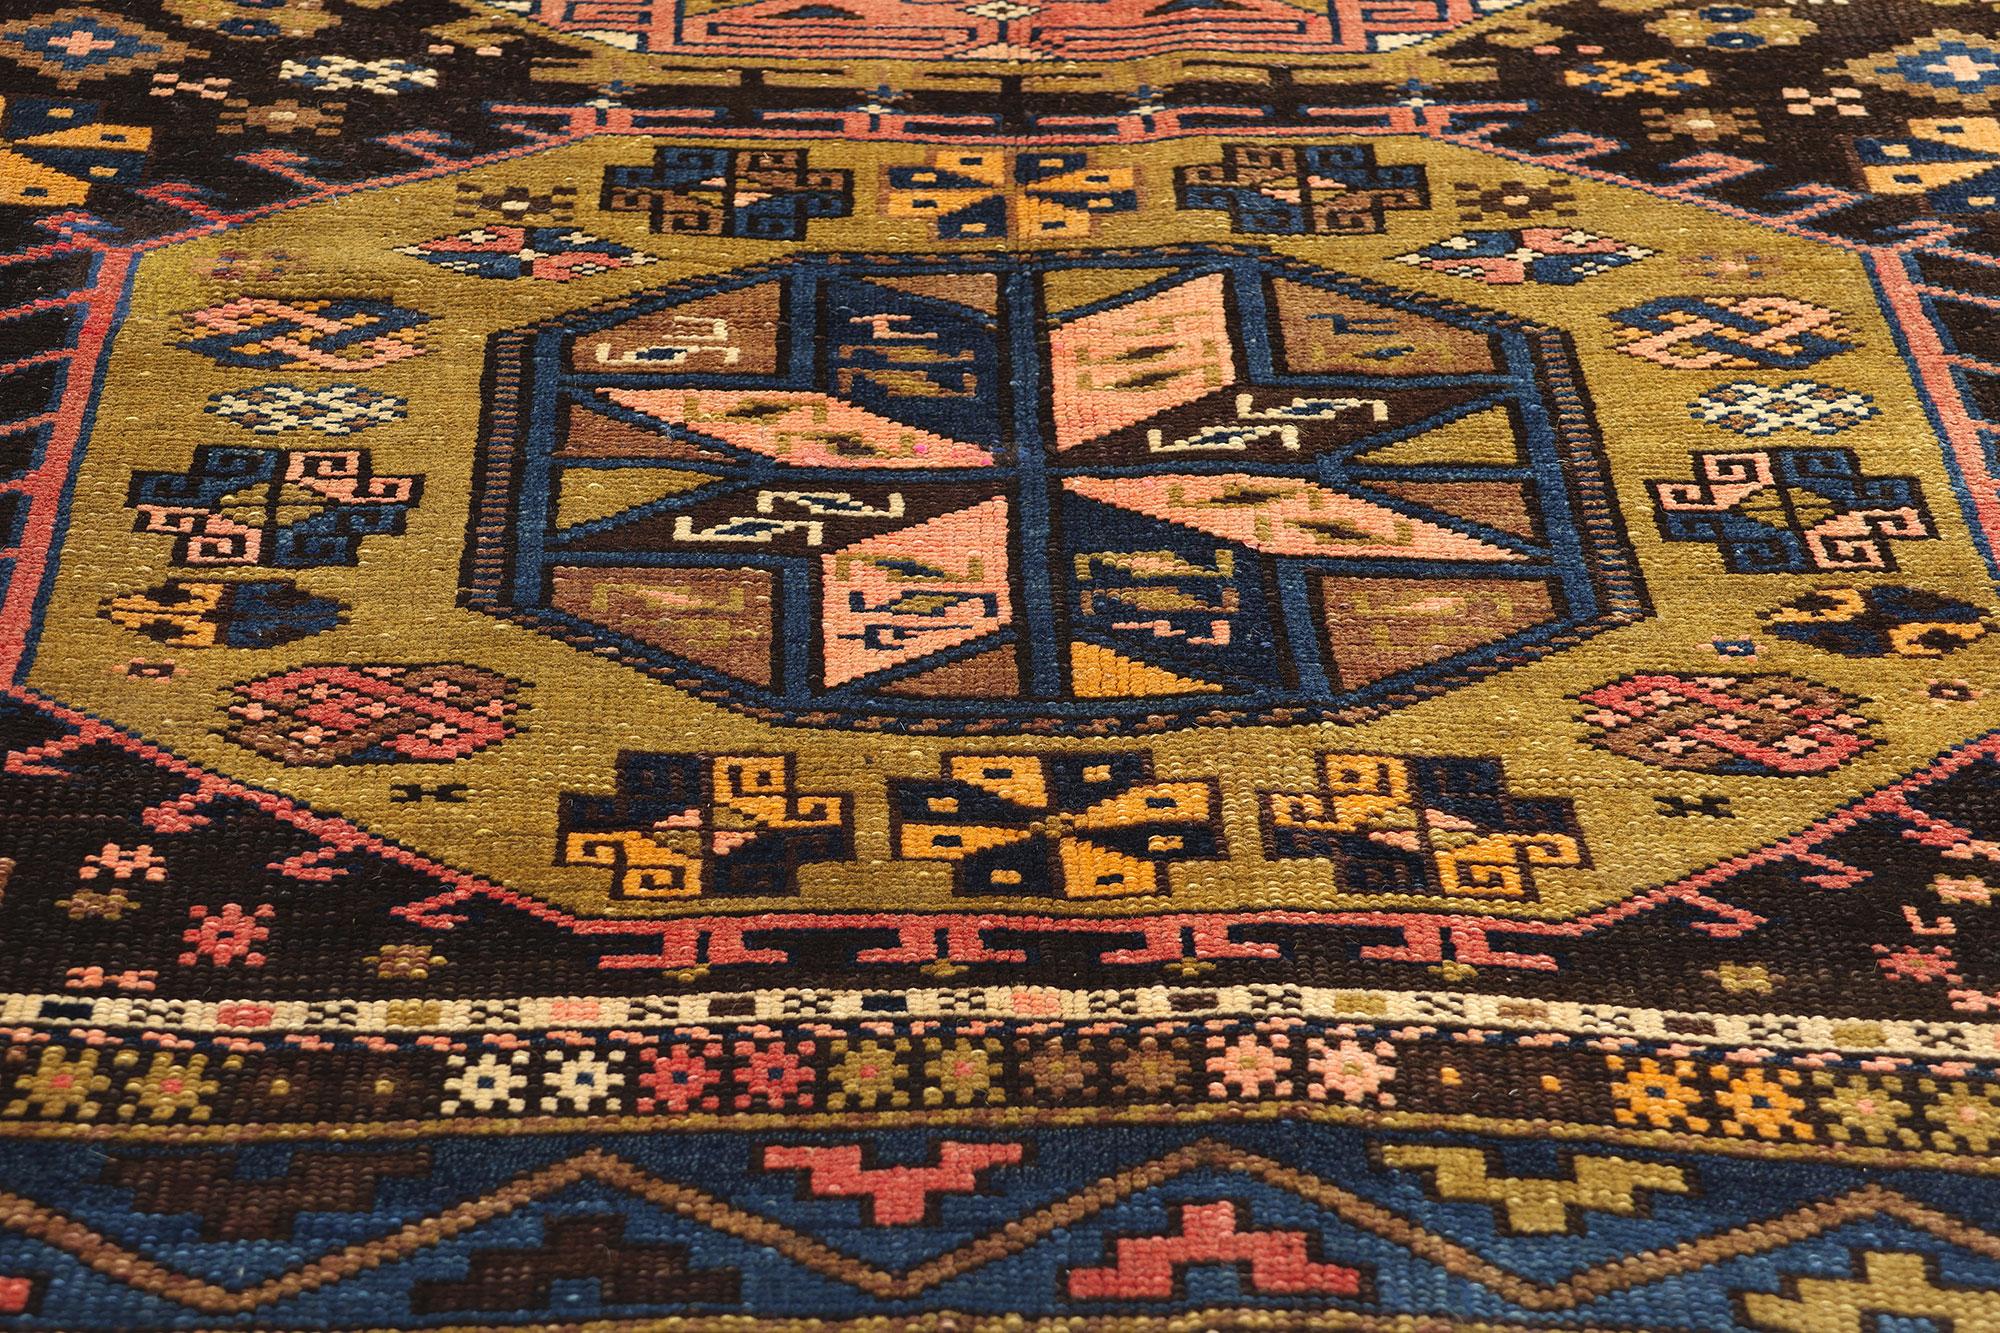 Late 19th Century Antique Caucasian Tribal Carpet In Good Condition For Sale In Dallas, TX